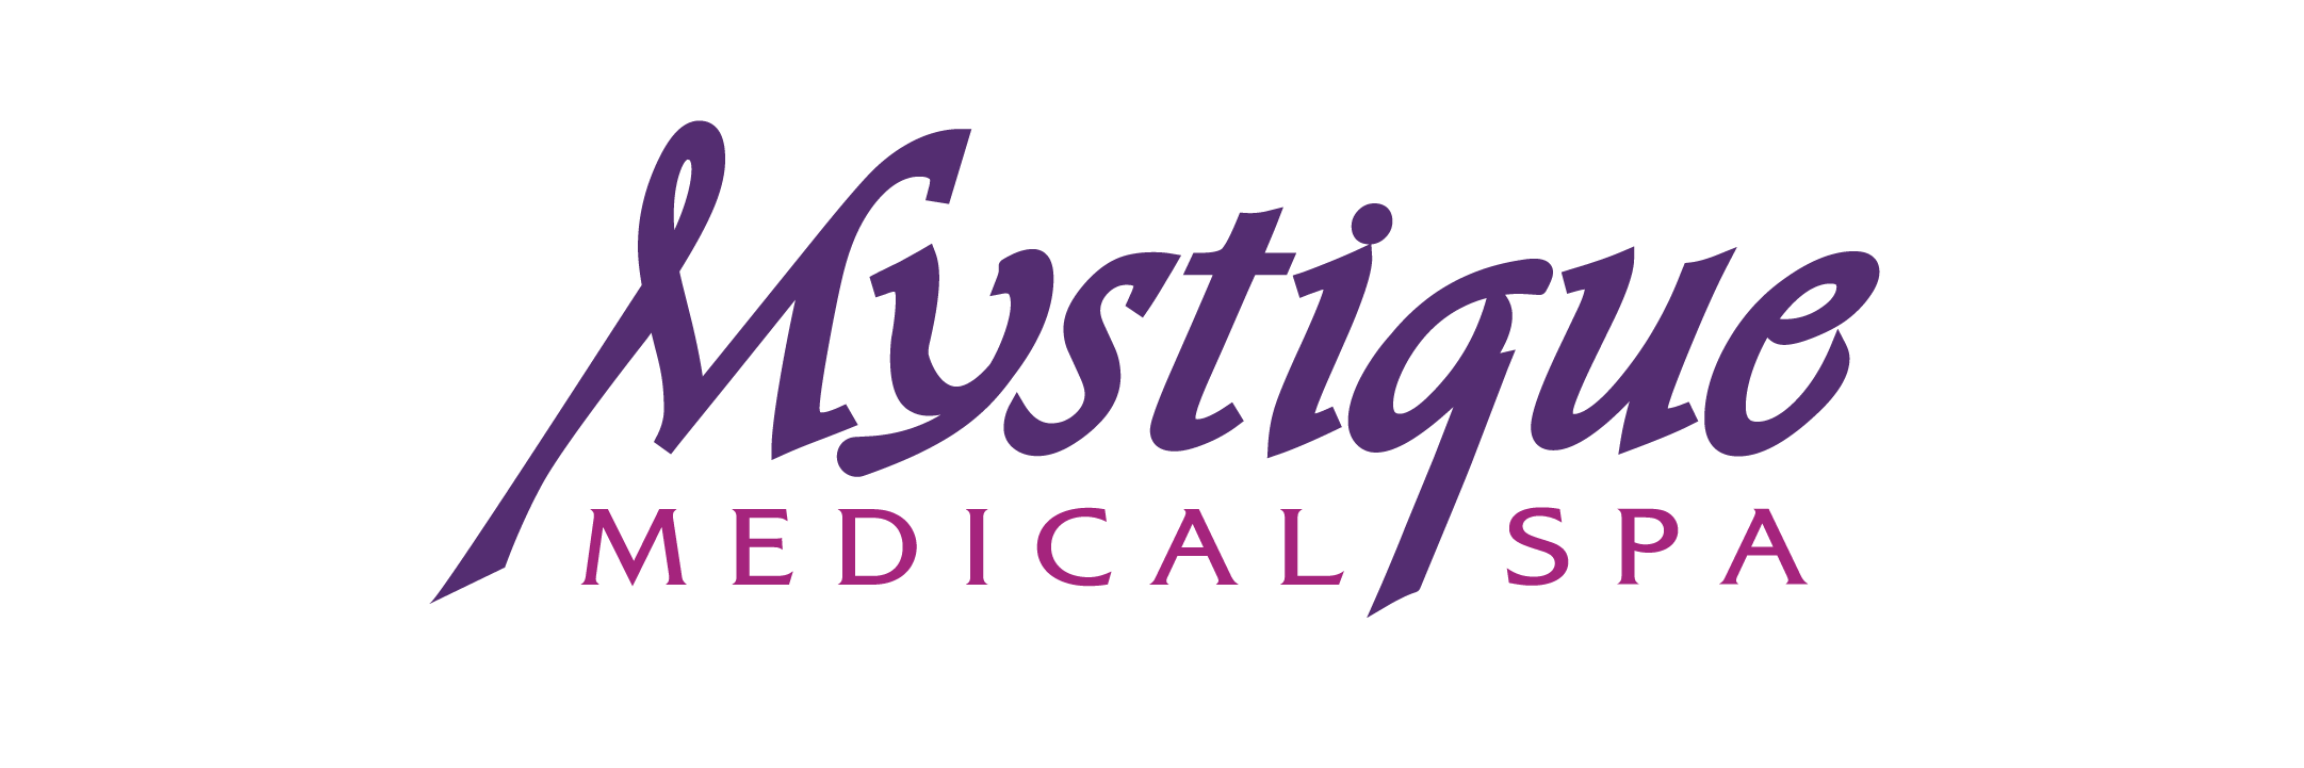 Mystique Medical Spa Fresno | Medical Spa Fresno | Spa Specials